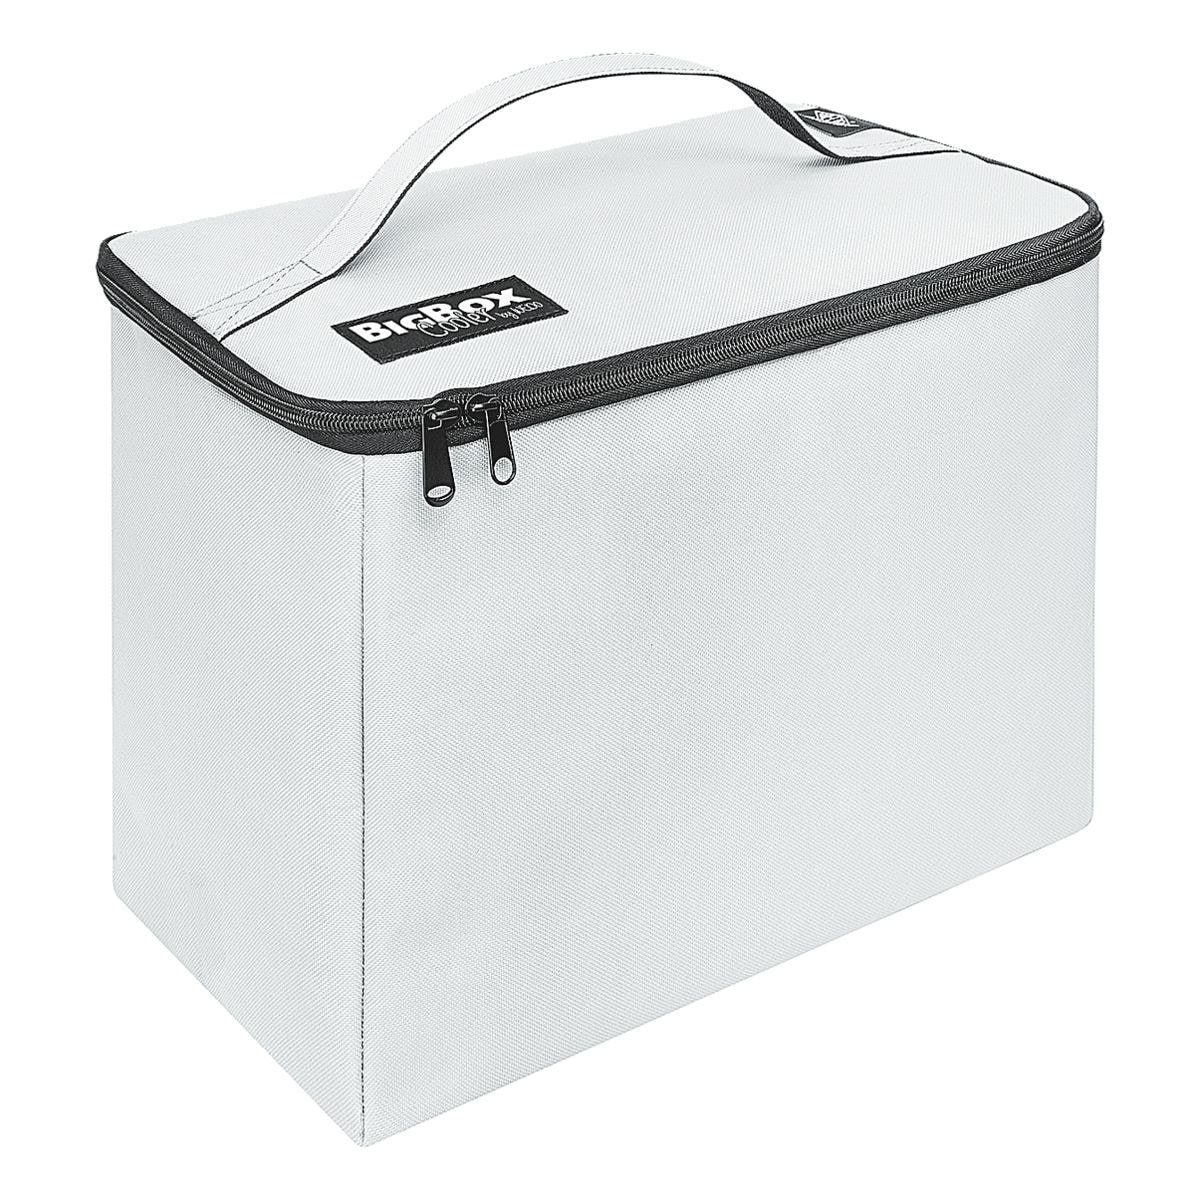 WEDO Kühltasche BigBox Cooler, 16,5 Liter